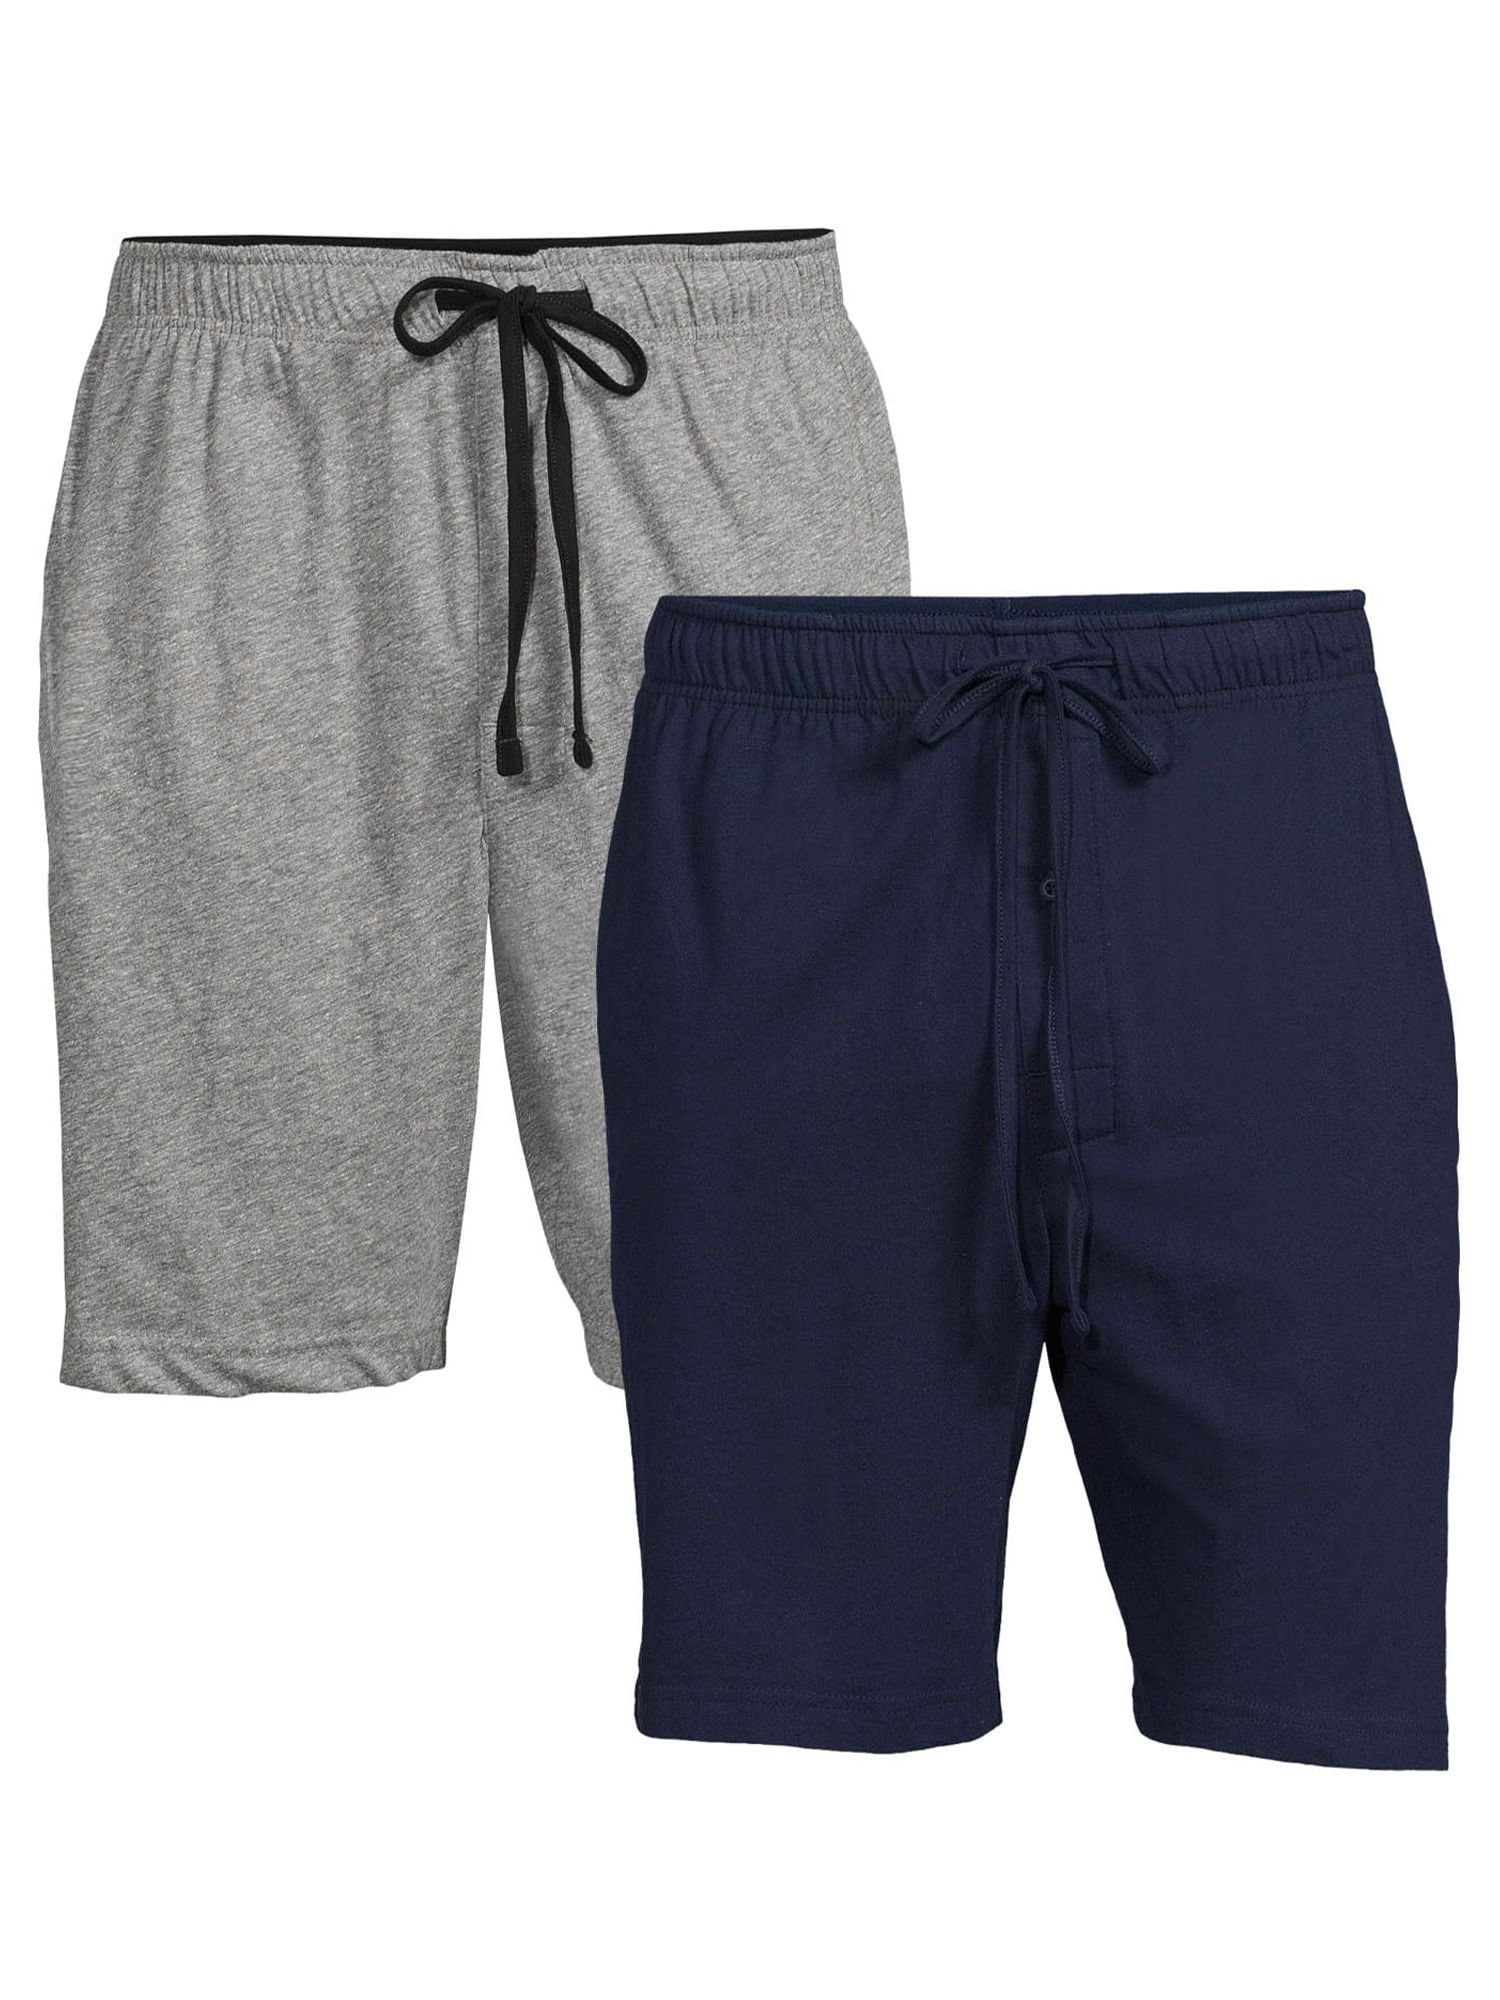 George Men's Knit Jam Sleep Shorts, 2-Pack, Sizes S-2XL - Walmart.com